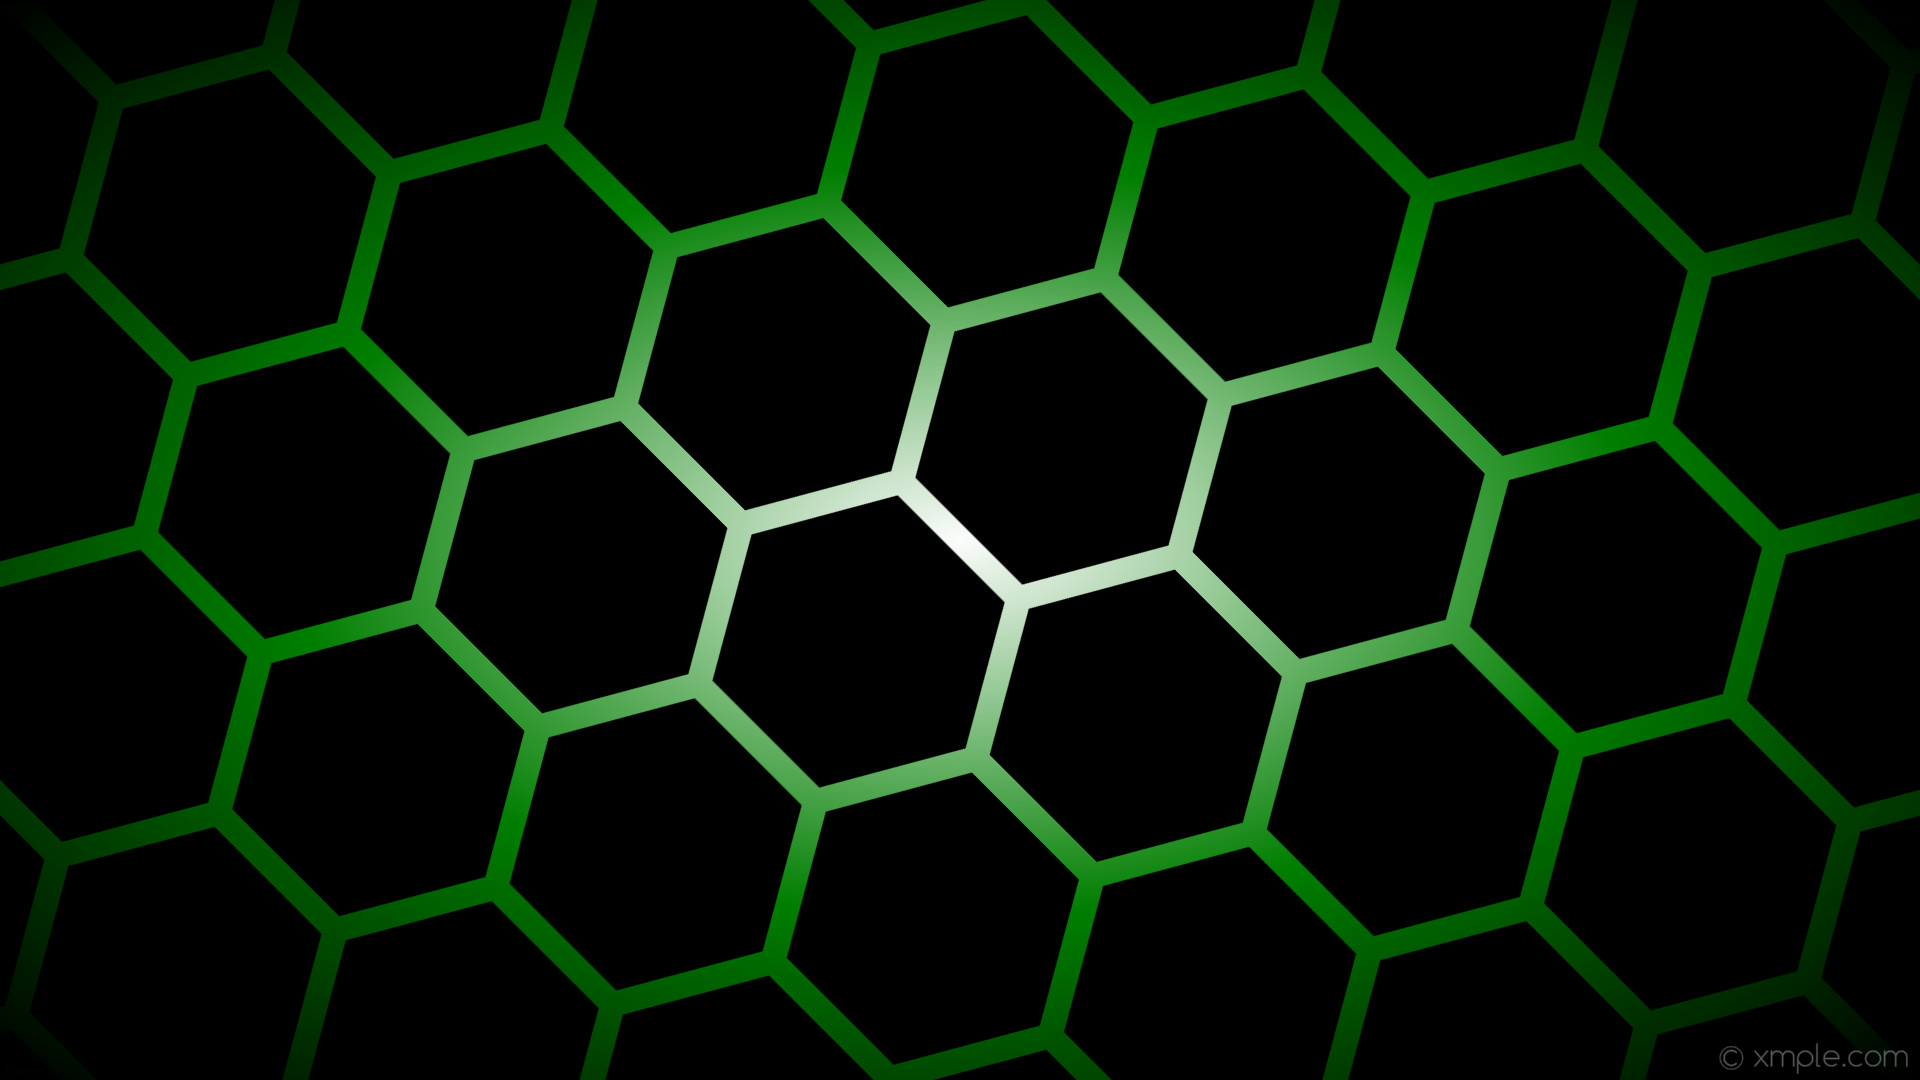 1920x1080 wallpaper glow hexagon green gradient white black #000000 #ffffff #008000  diagonal 45Â°